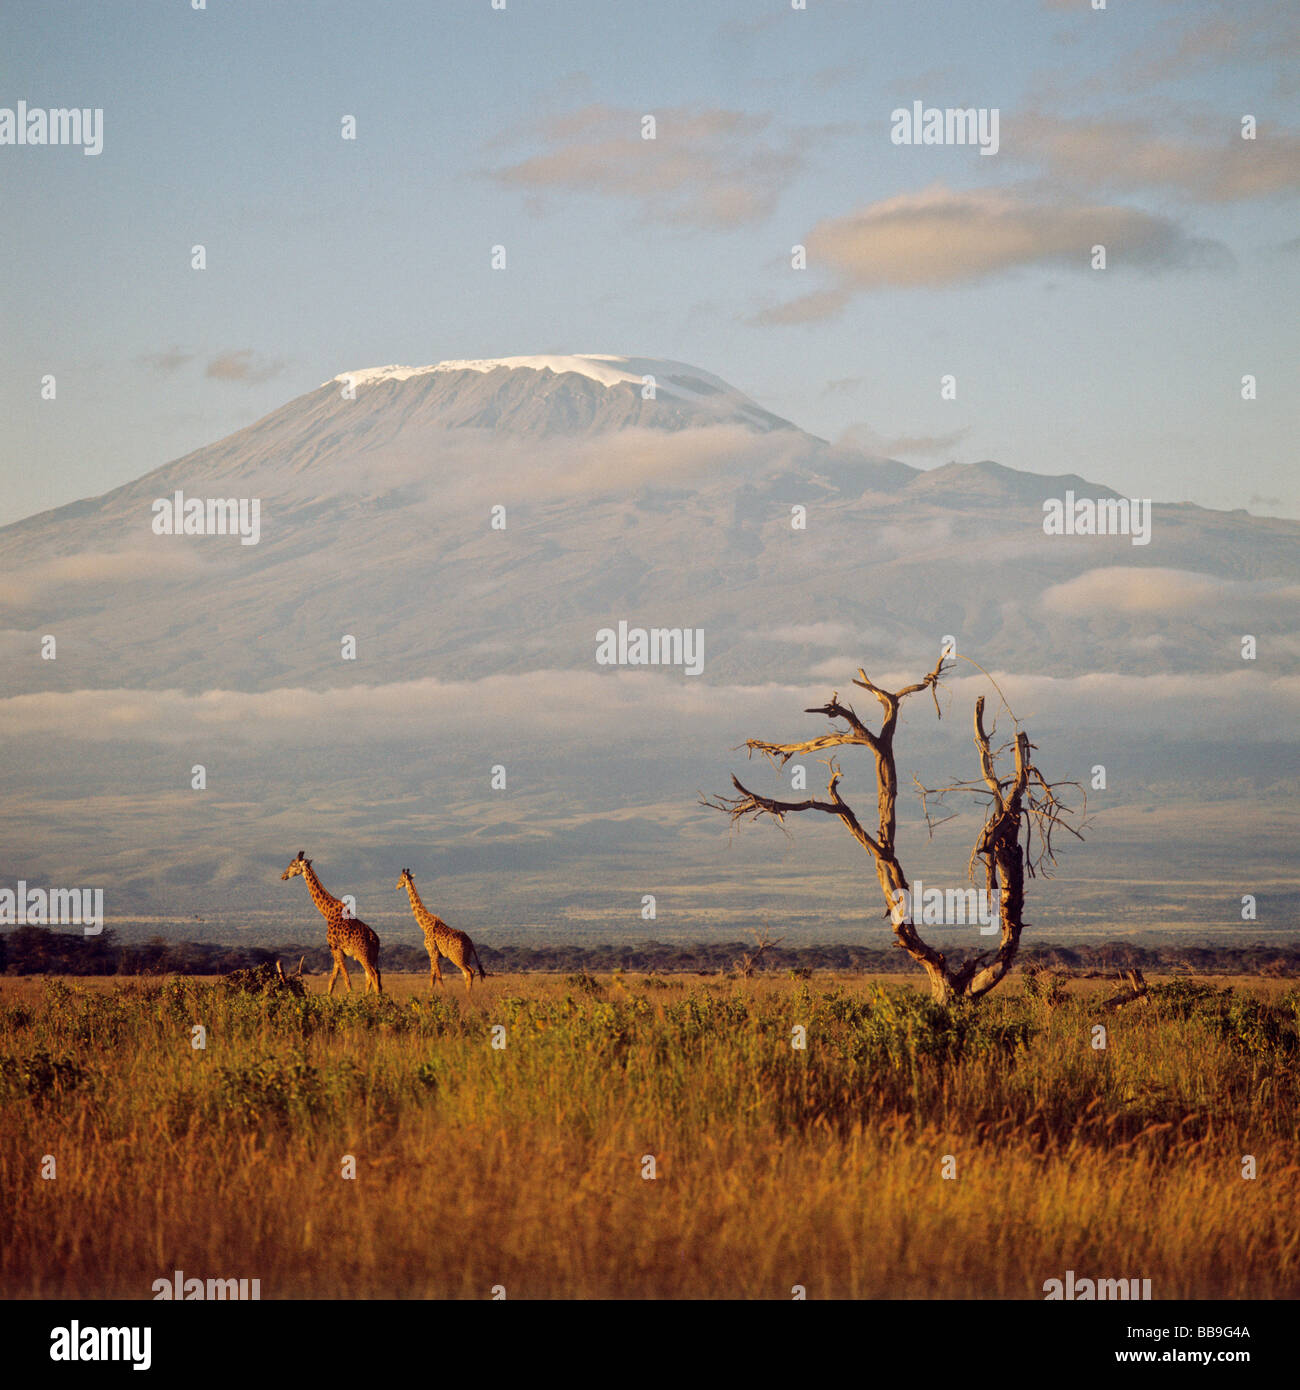 mount kilimanjaro amboseli nationalpark kenya Stock Photo